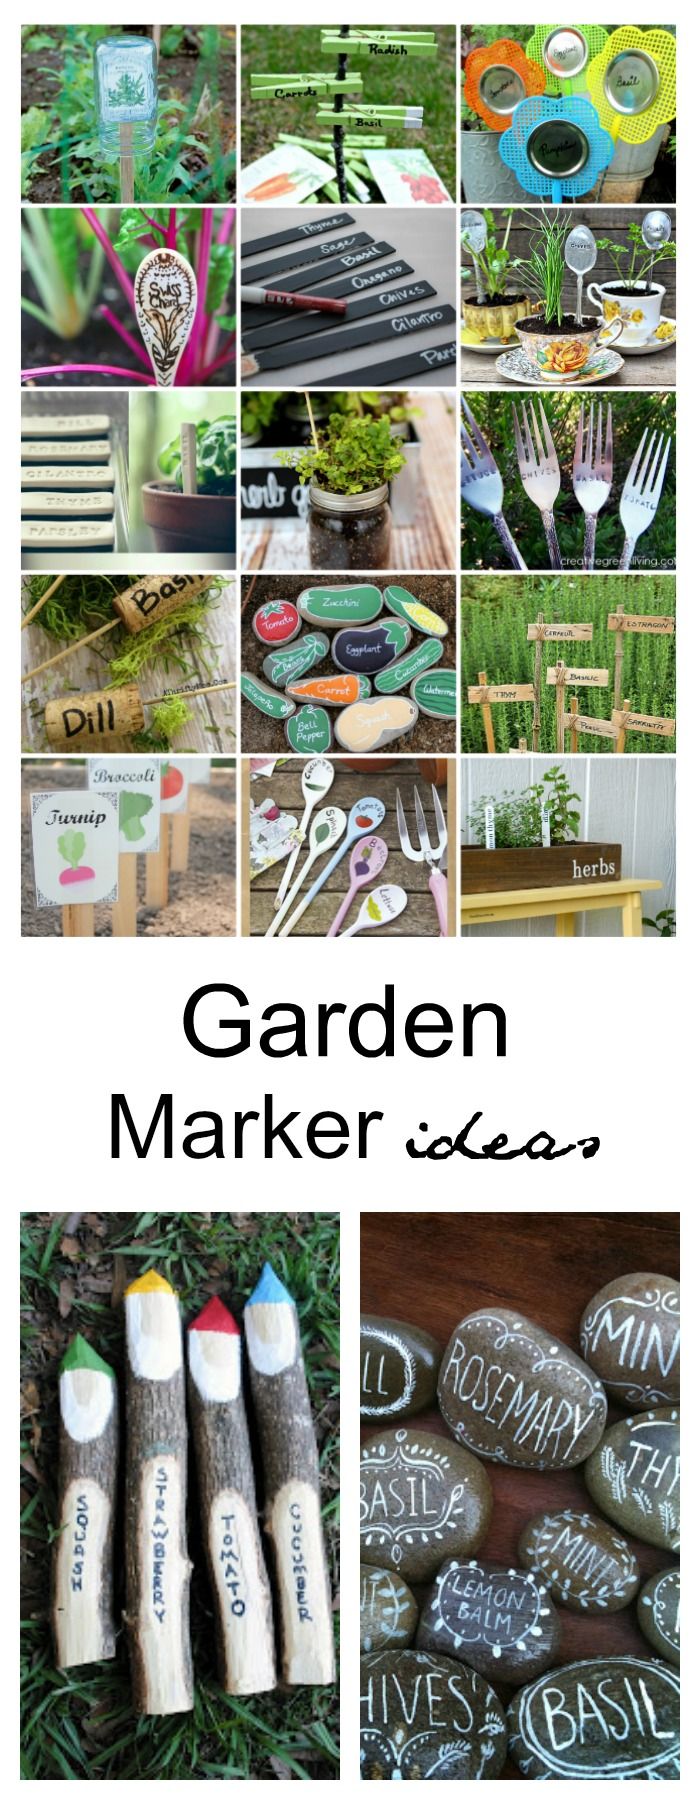 Garden Marker Ideas